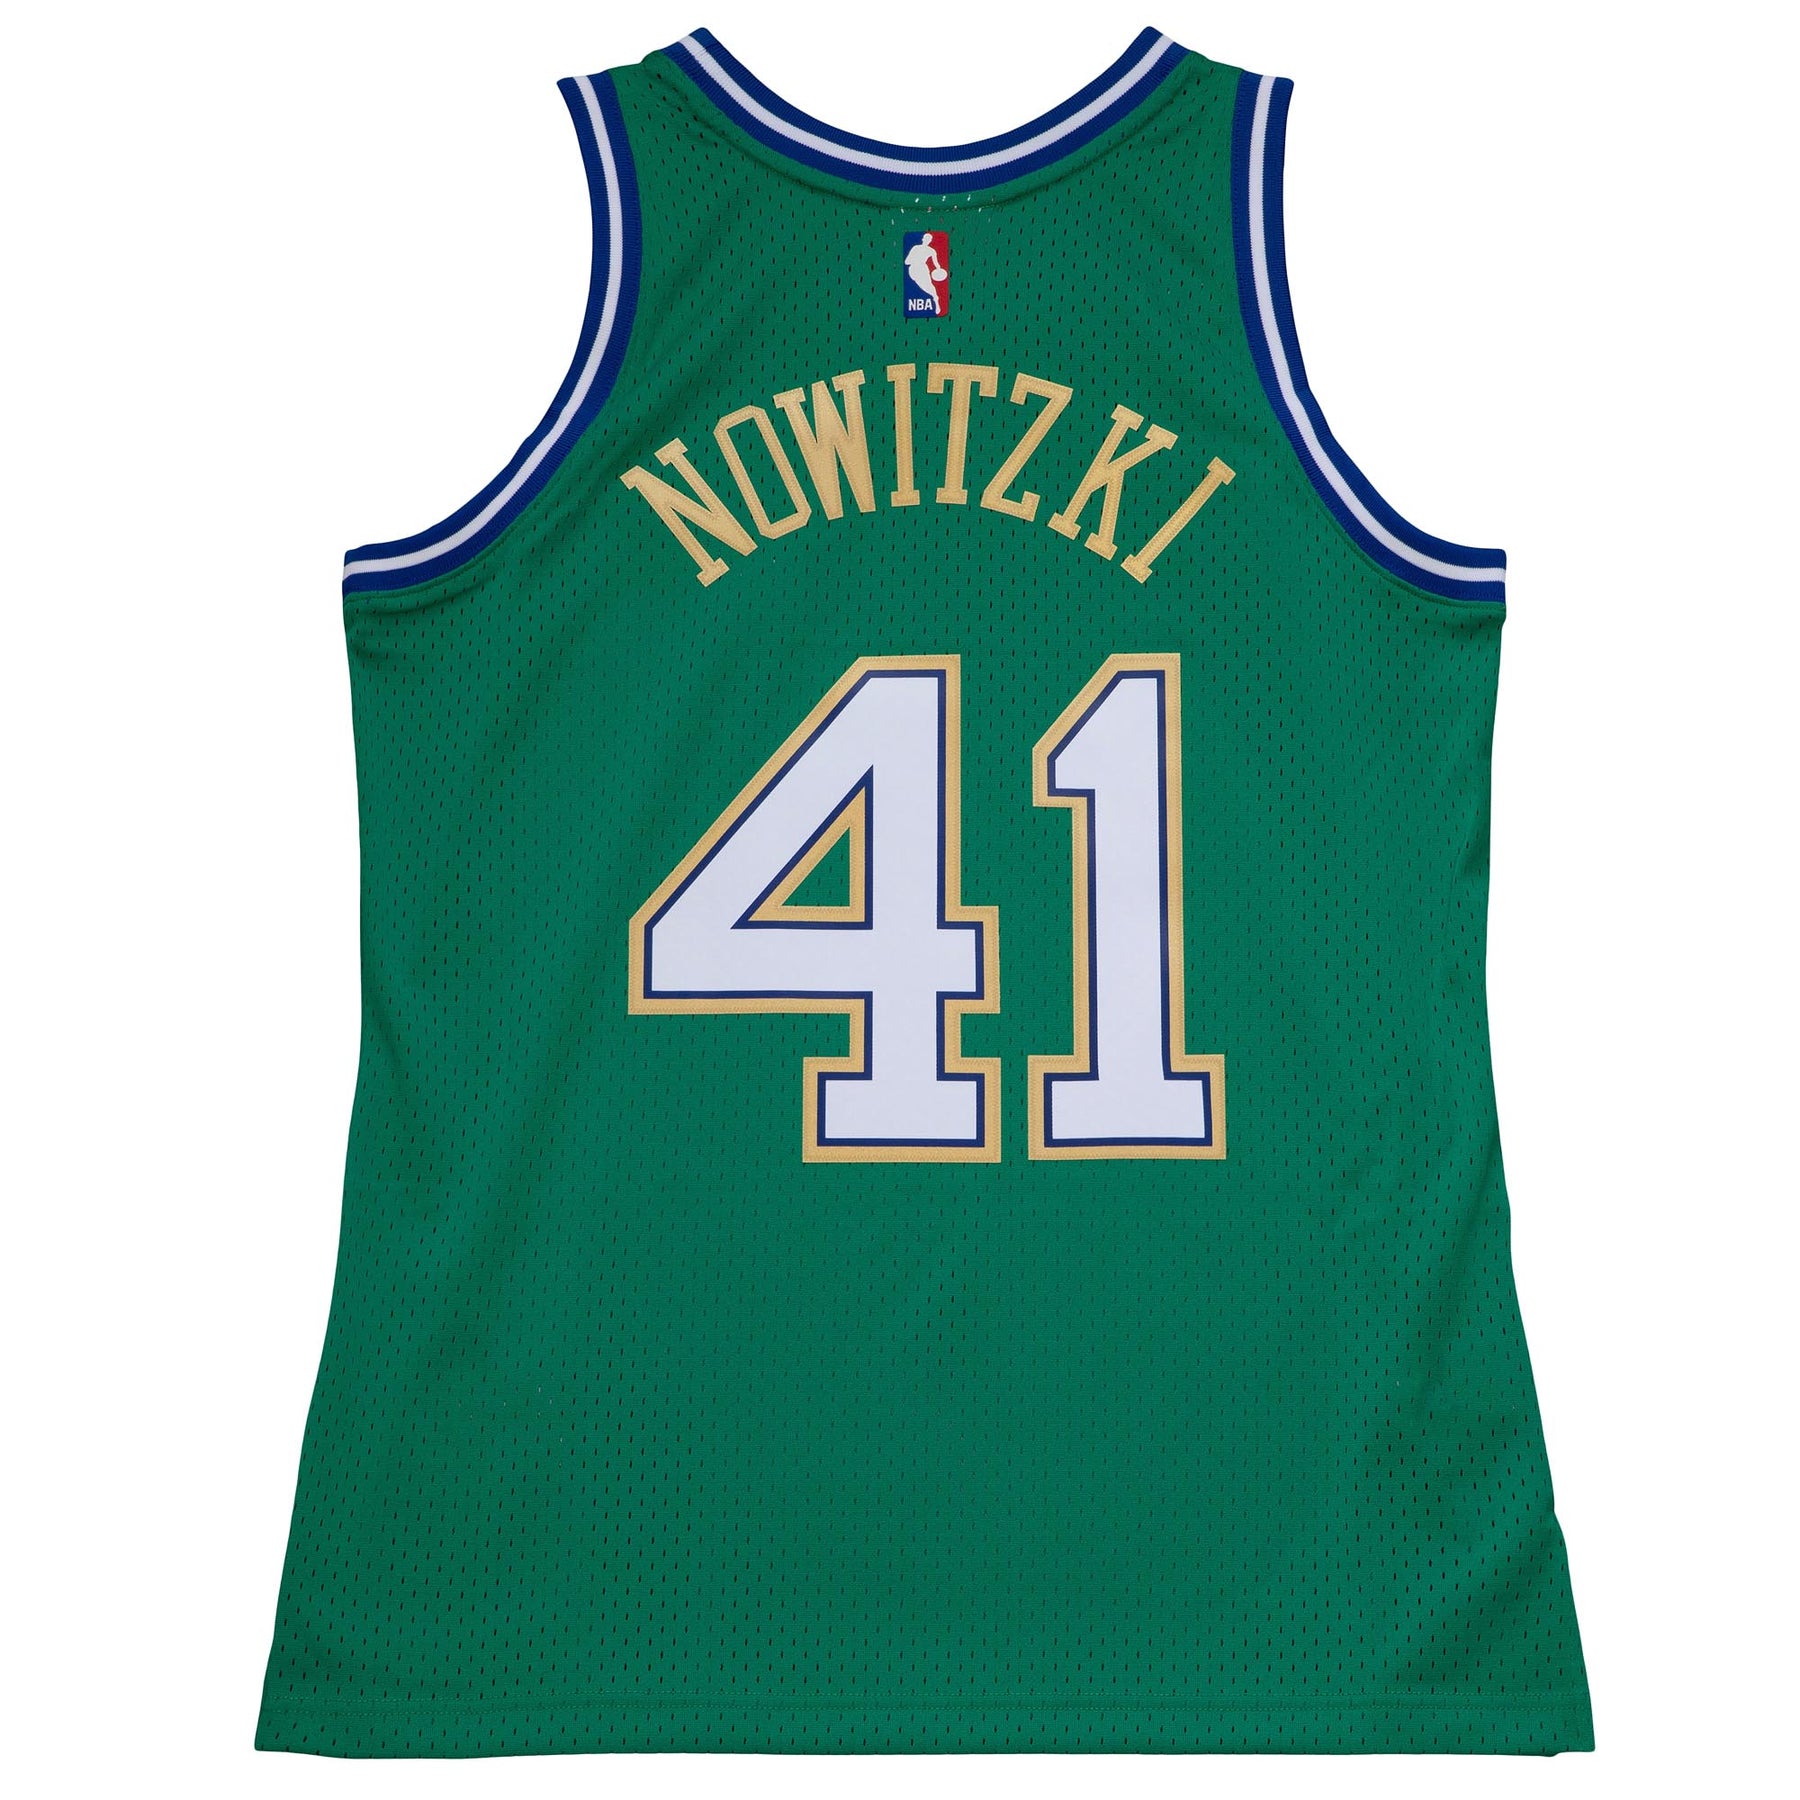 Dallas Mavericks jersey Dirk Nowitzki basketball NBA shirt size S